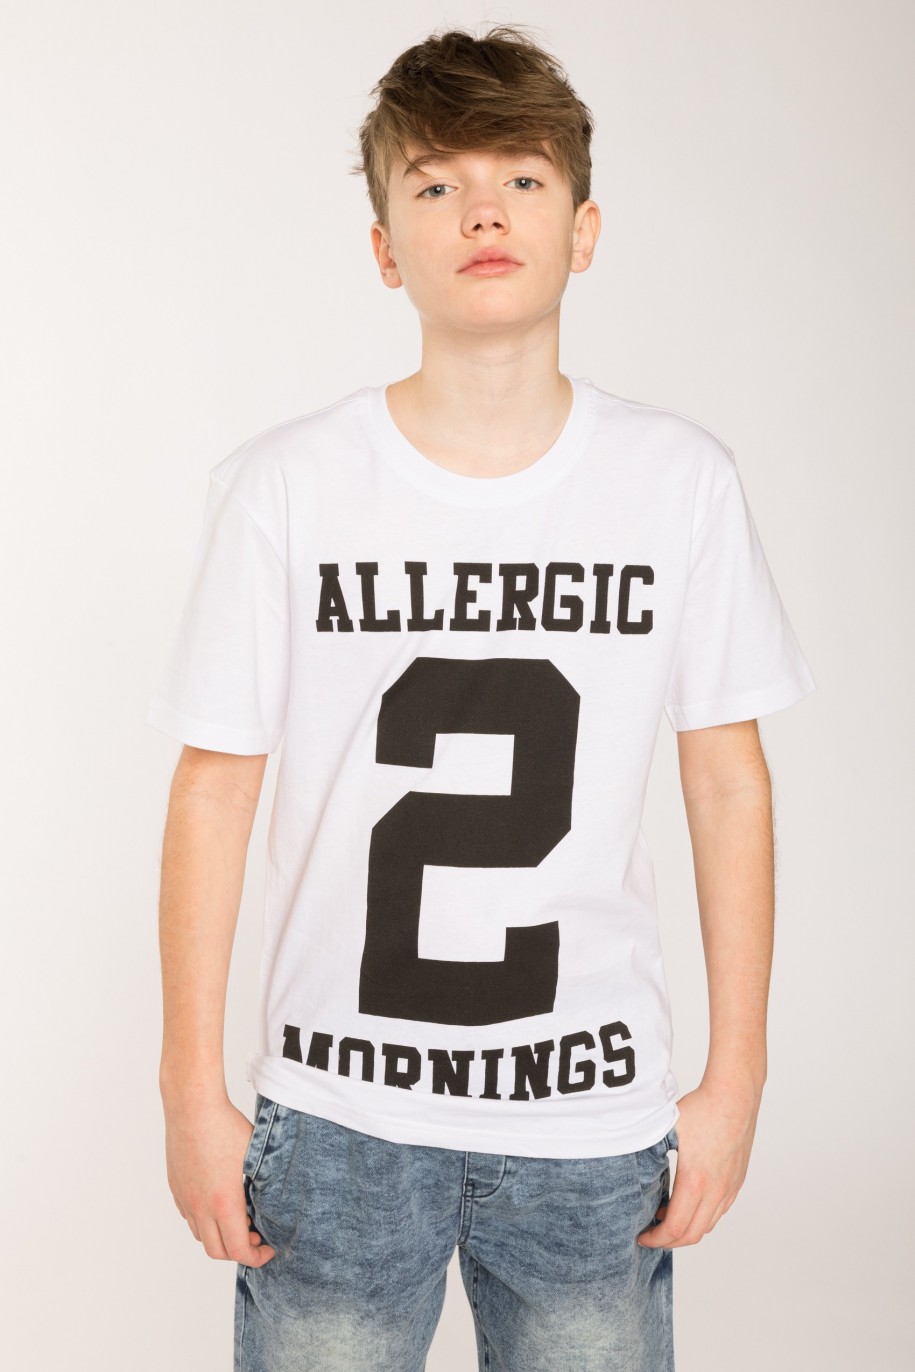 Biały t-shirt dla chłopaka ALLERGIC 2 MORNINGS - 27829